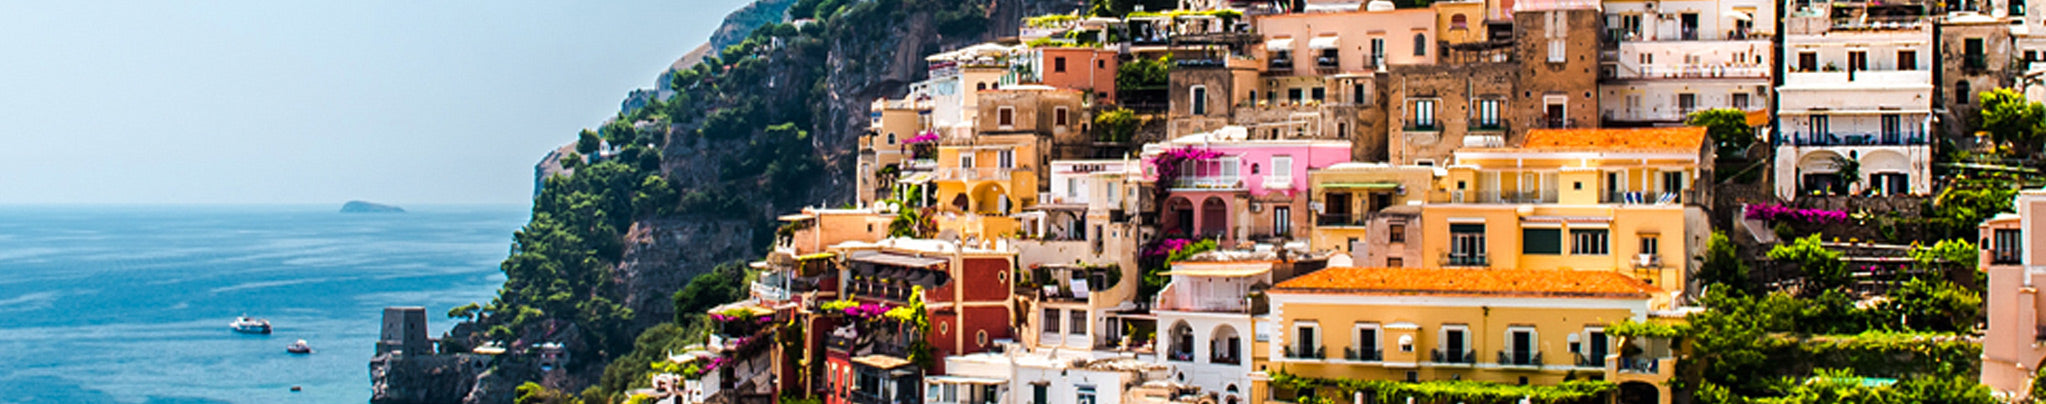 Shop The Look: The Amalfi Coast